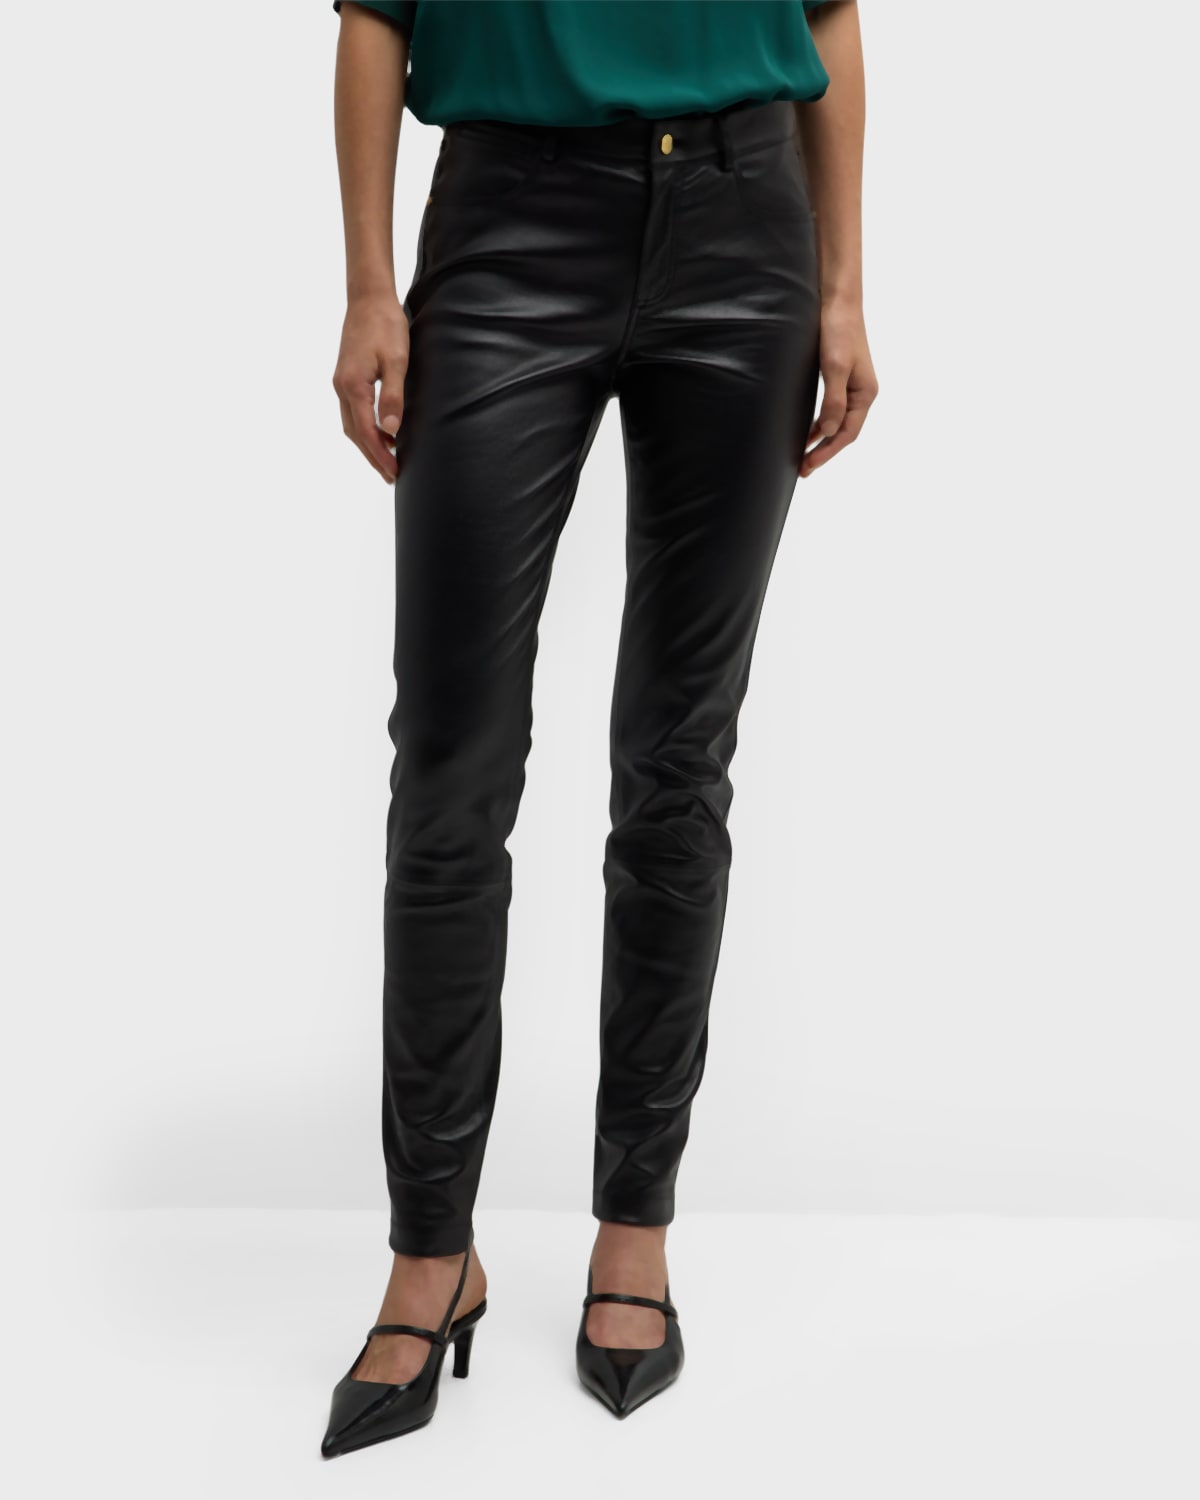 Black Leather Designer Jeans for Women